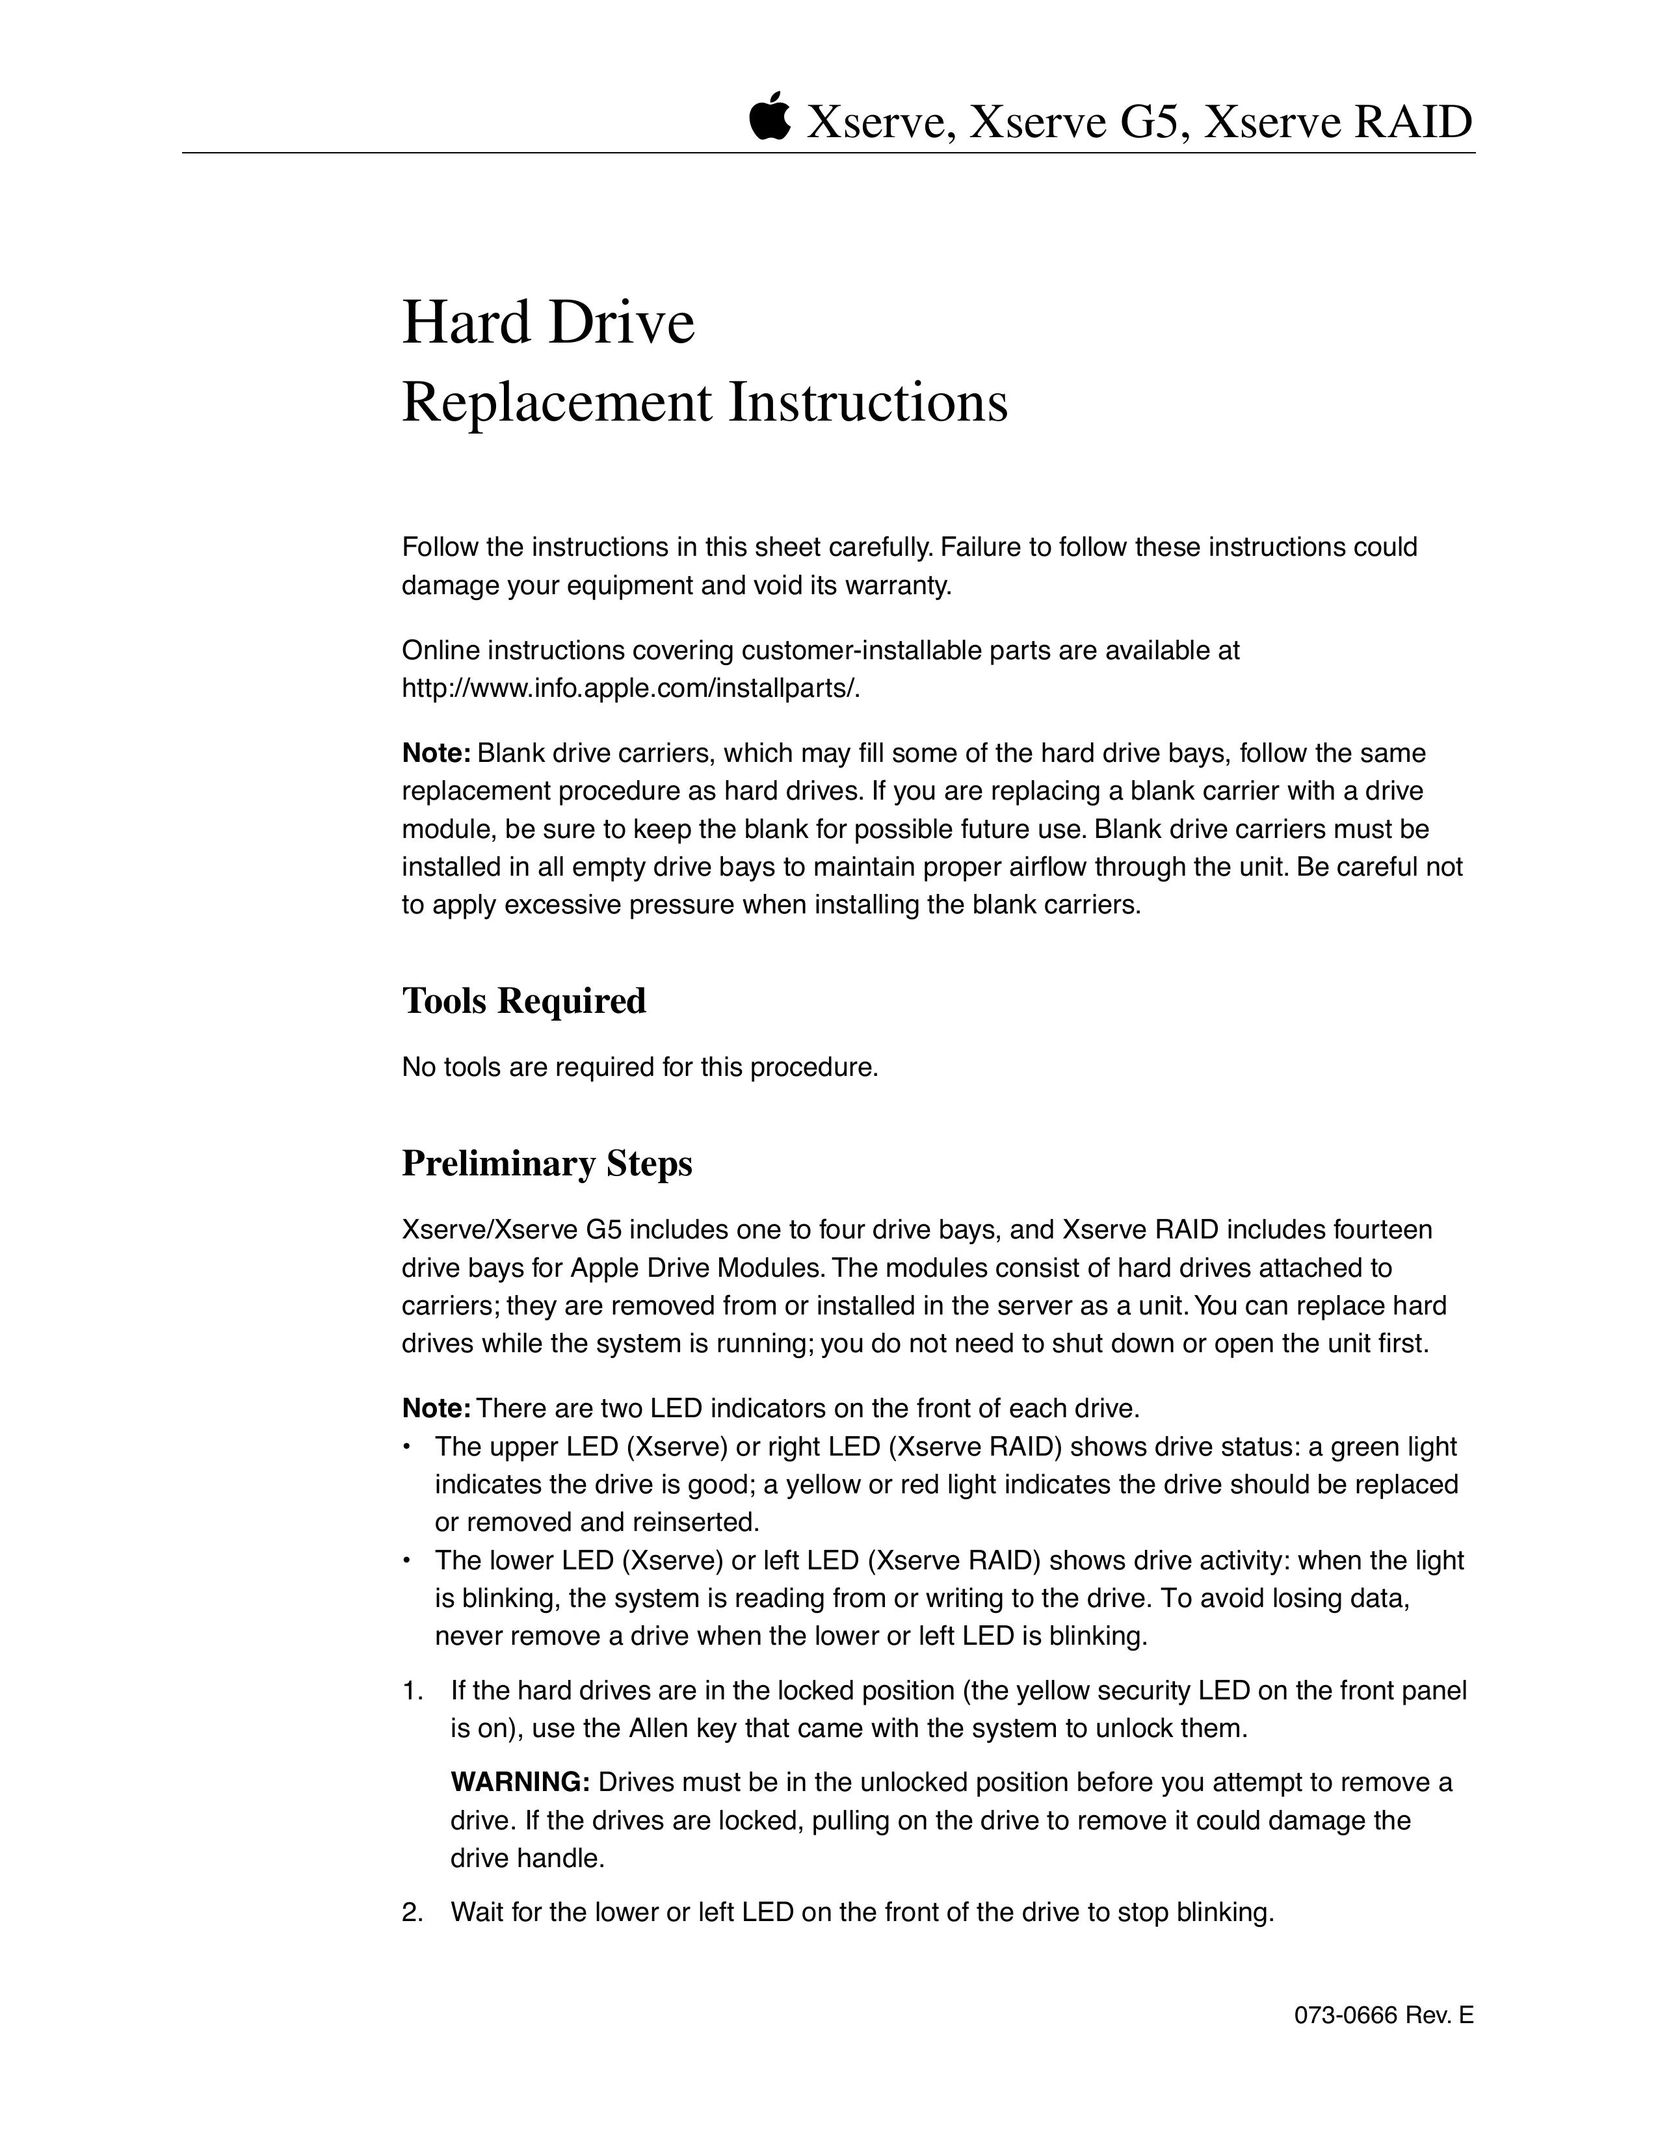 Apple RAID Computer Drive User Manual